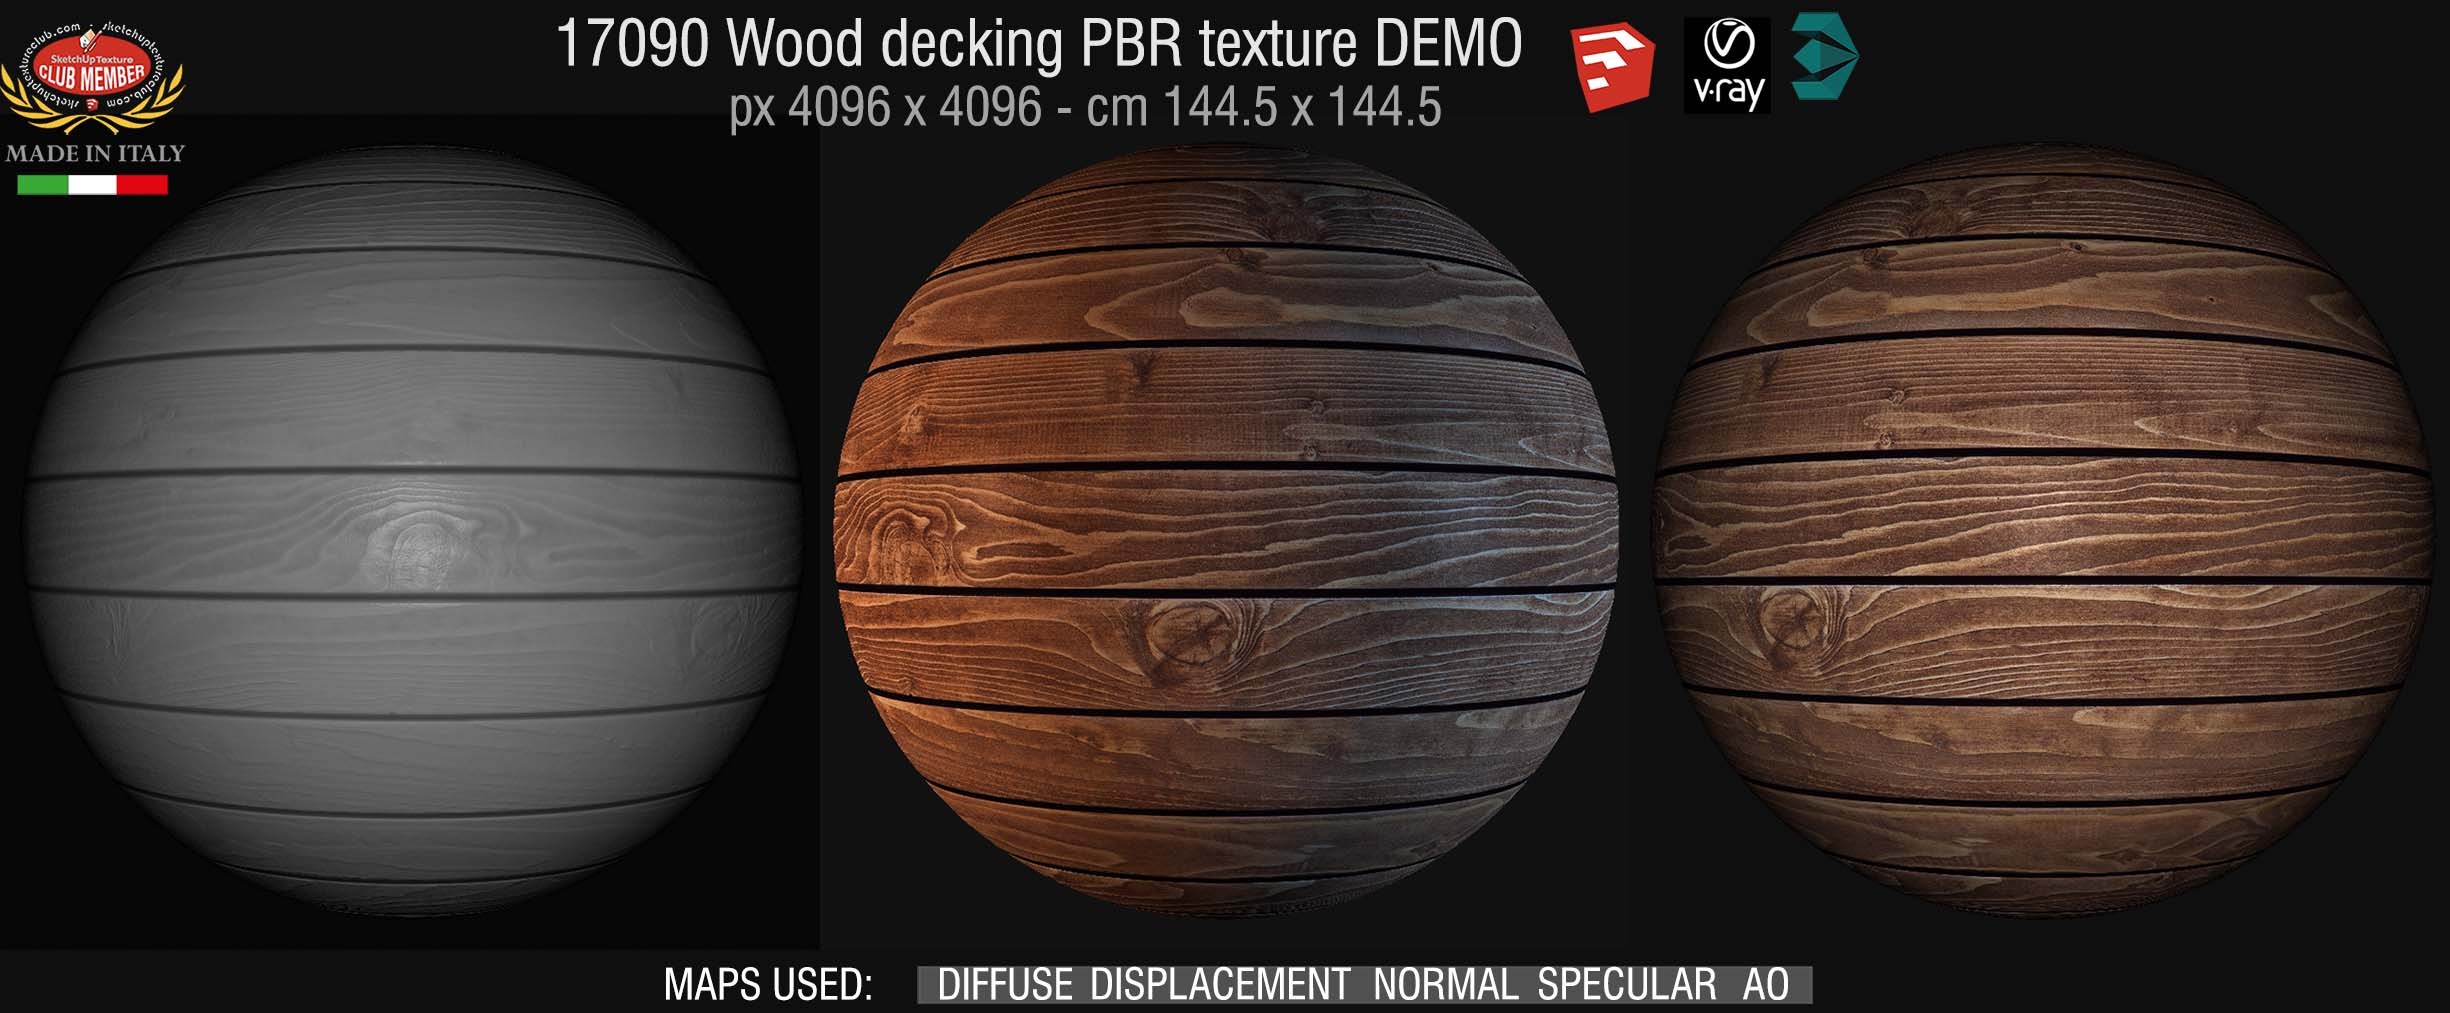 17090 Wood decking PBR texture seamless DEMO